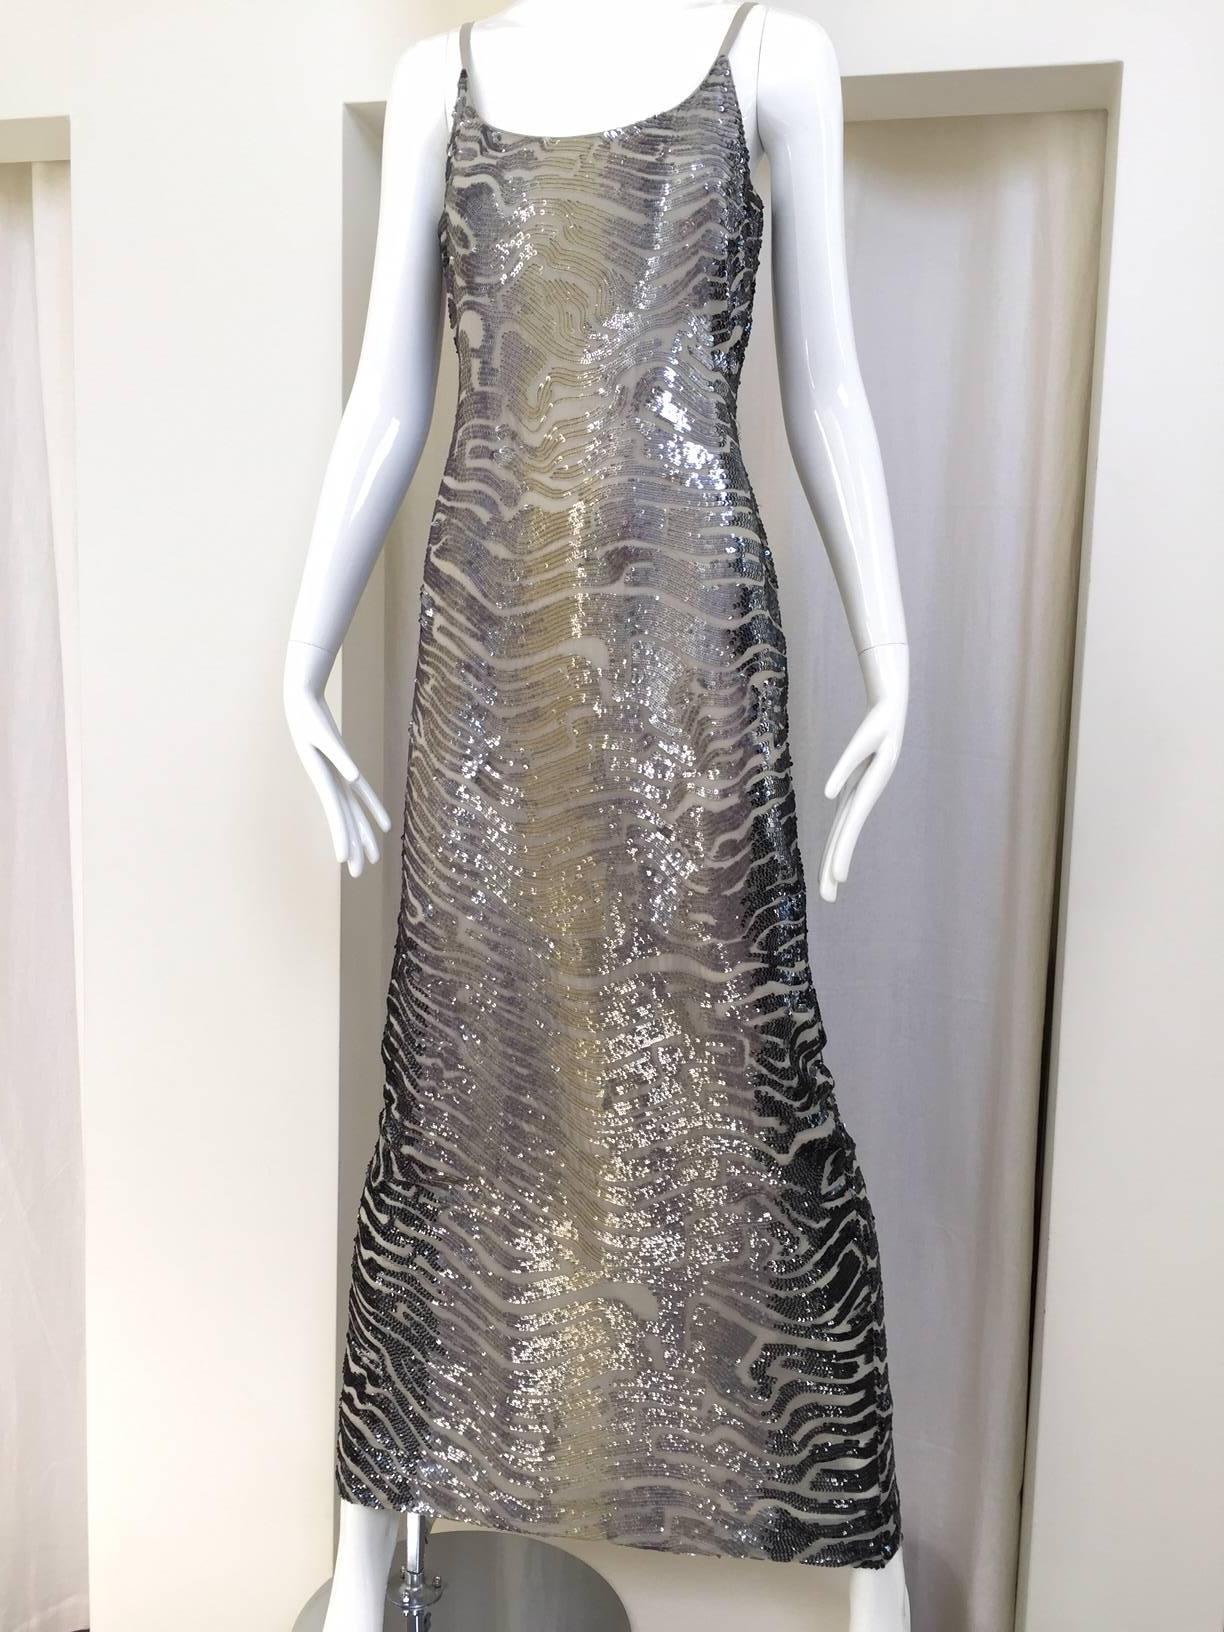 1990s vintage Giorgio Armani silver and gray sequin spaghetti strap cocktail dress.
Bust: 32